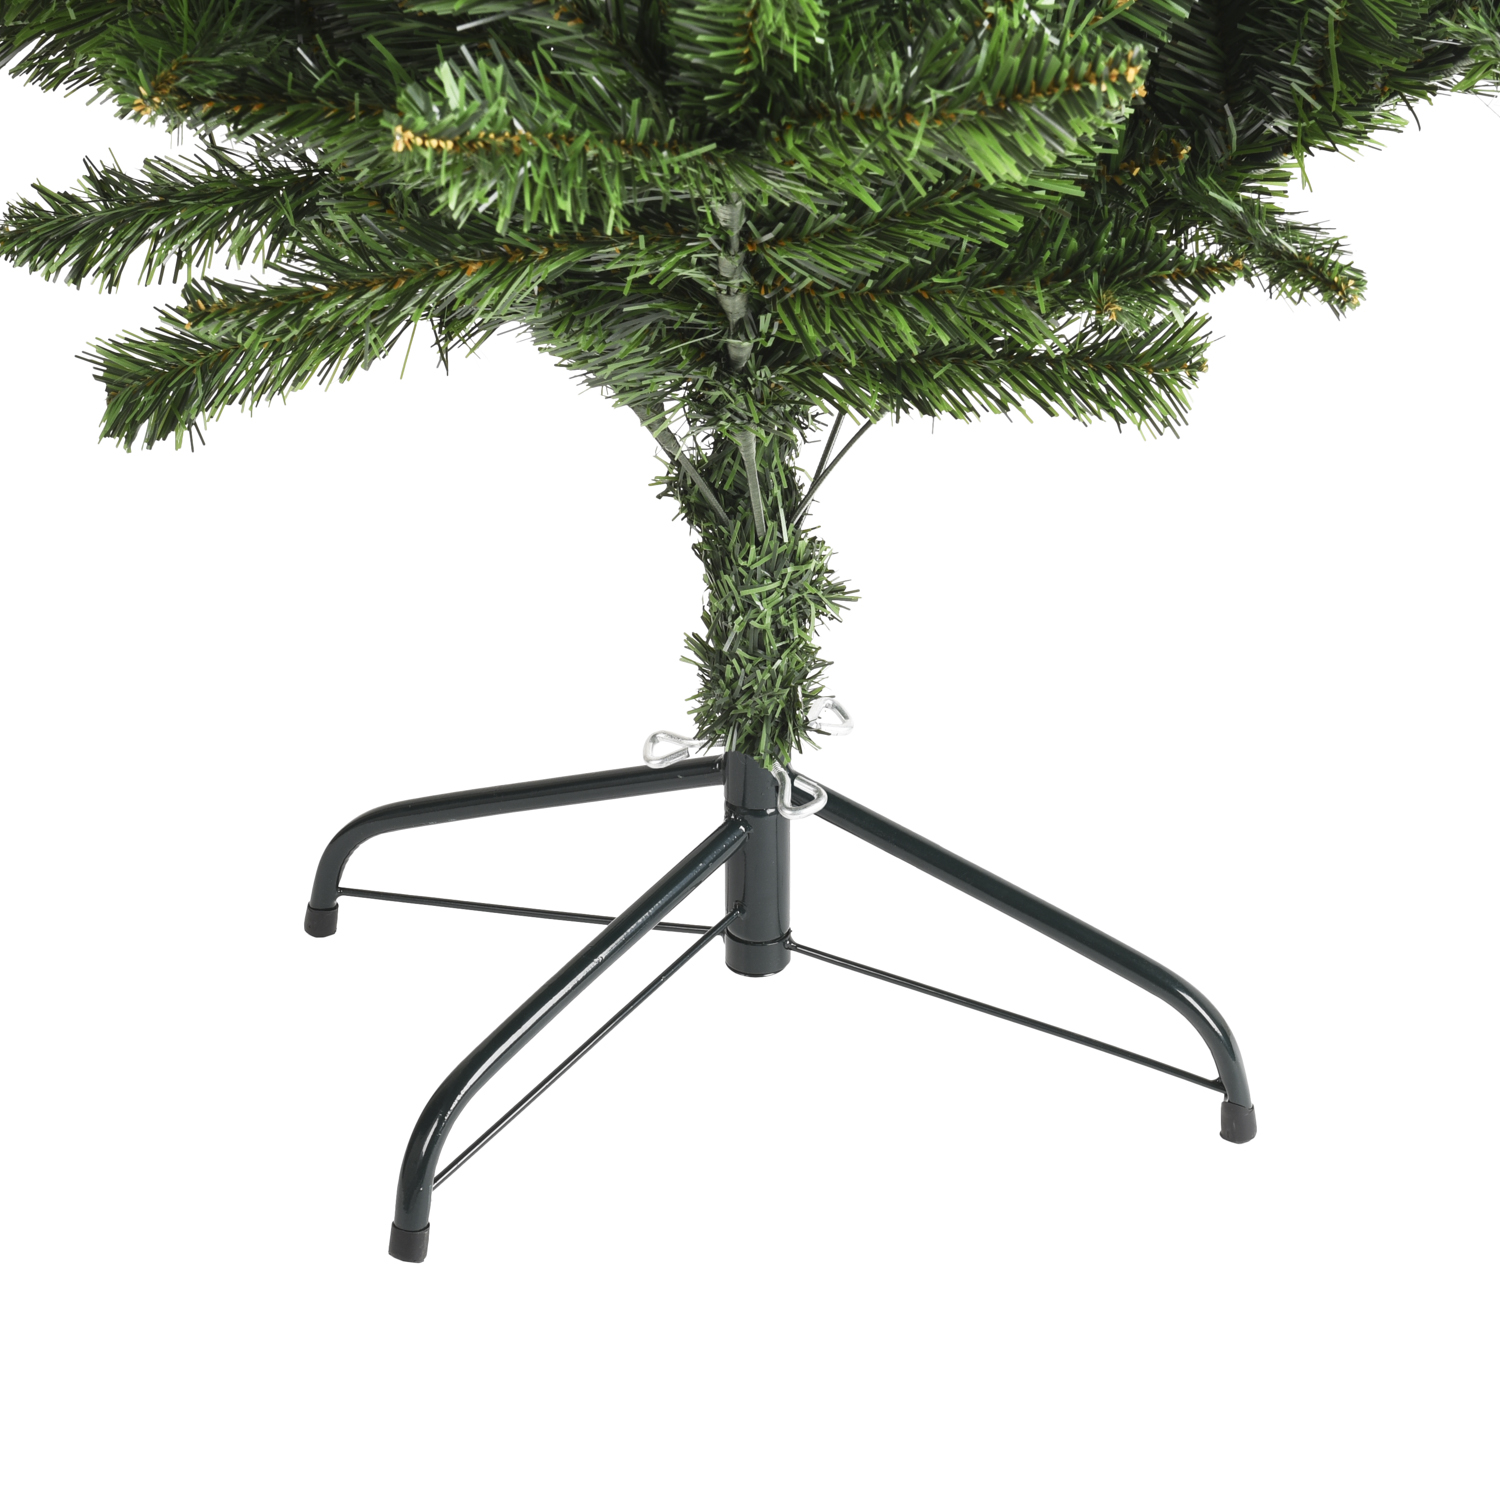 Home Treats 6ft Half Christmas Tree With Metal Stand - Home Treats UK